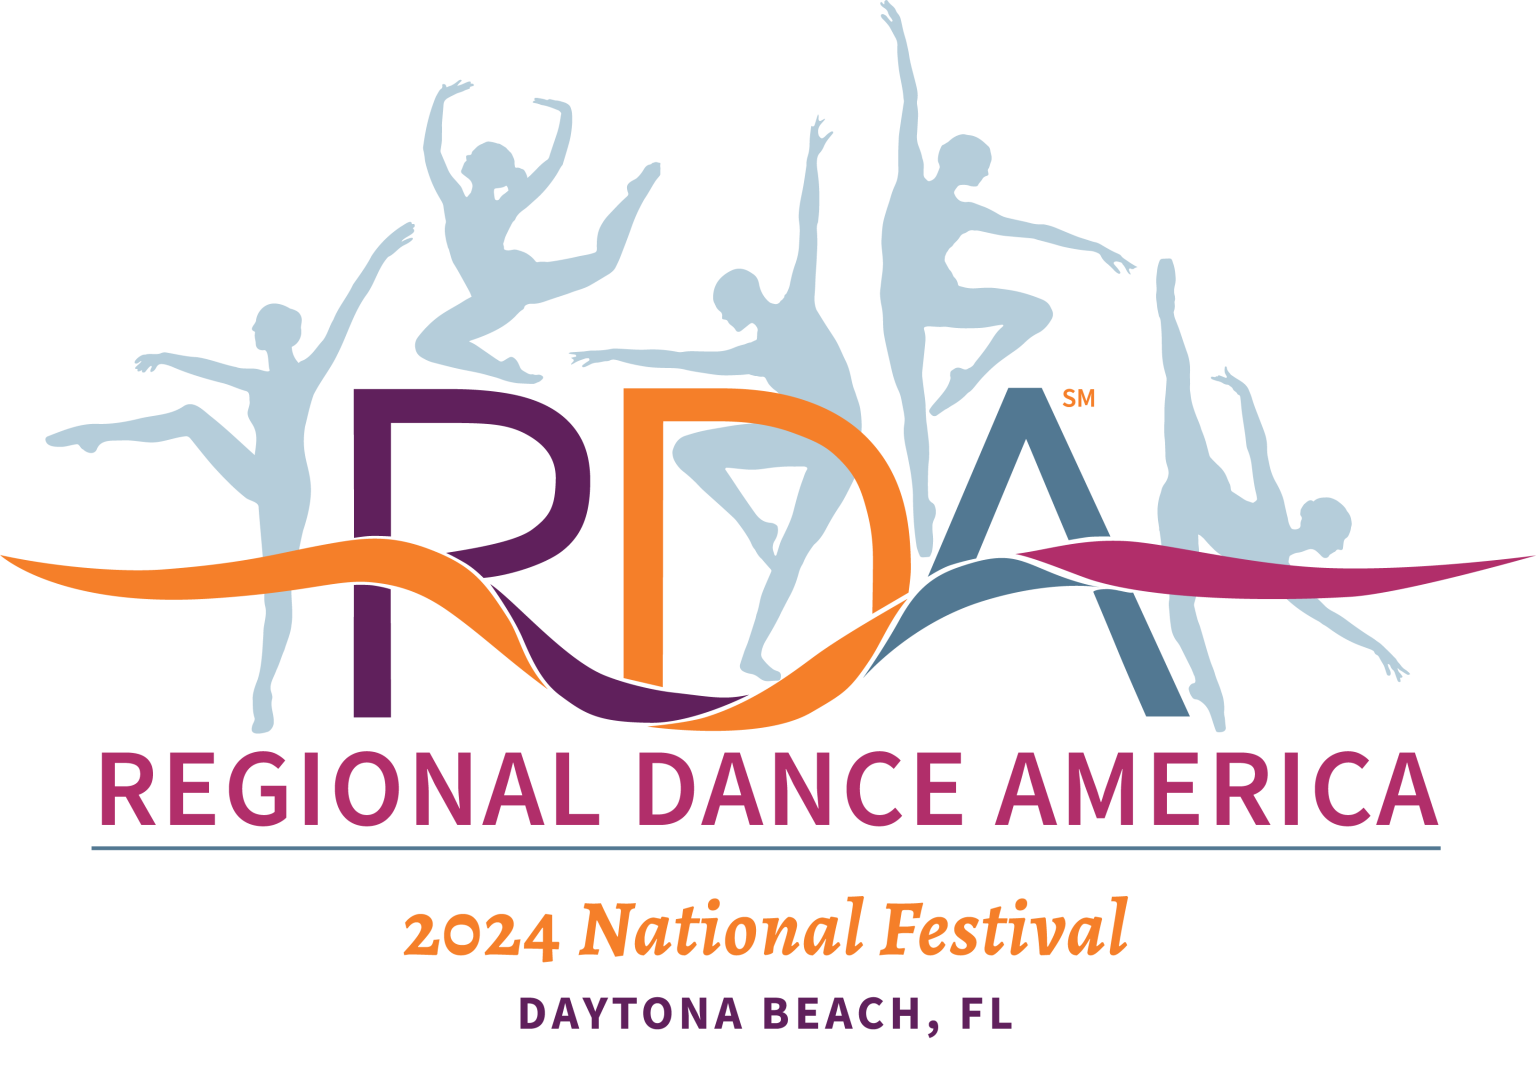 Regional Dance America 2024 National Festival